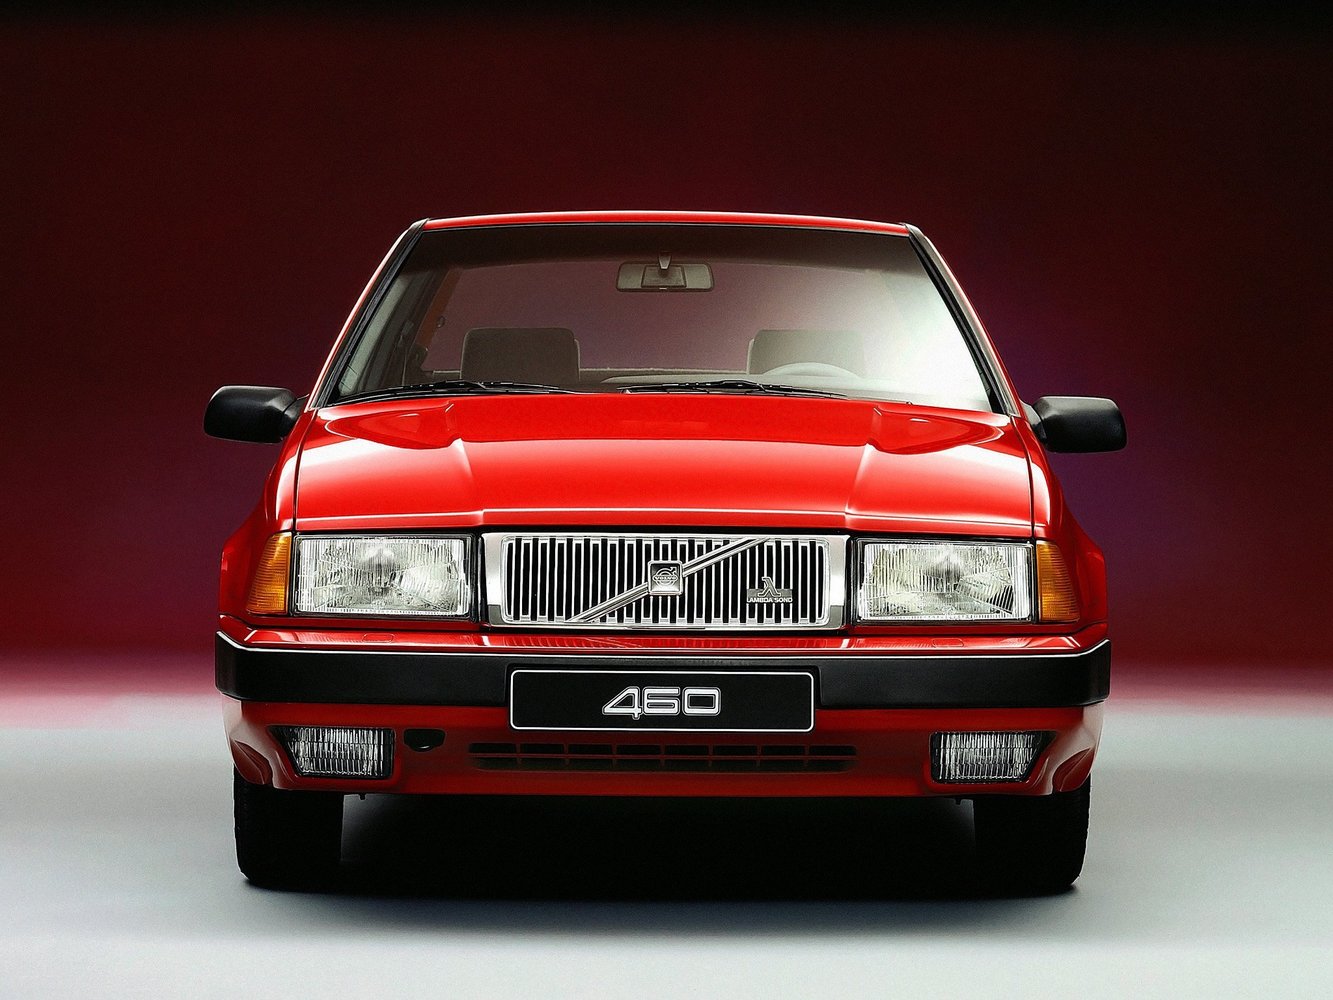 седан Volvo 460 1988 - 1997г выпуска модификация 1.6 MT (82 л.с.)